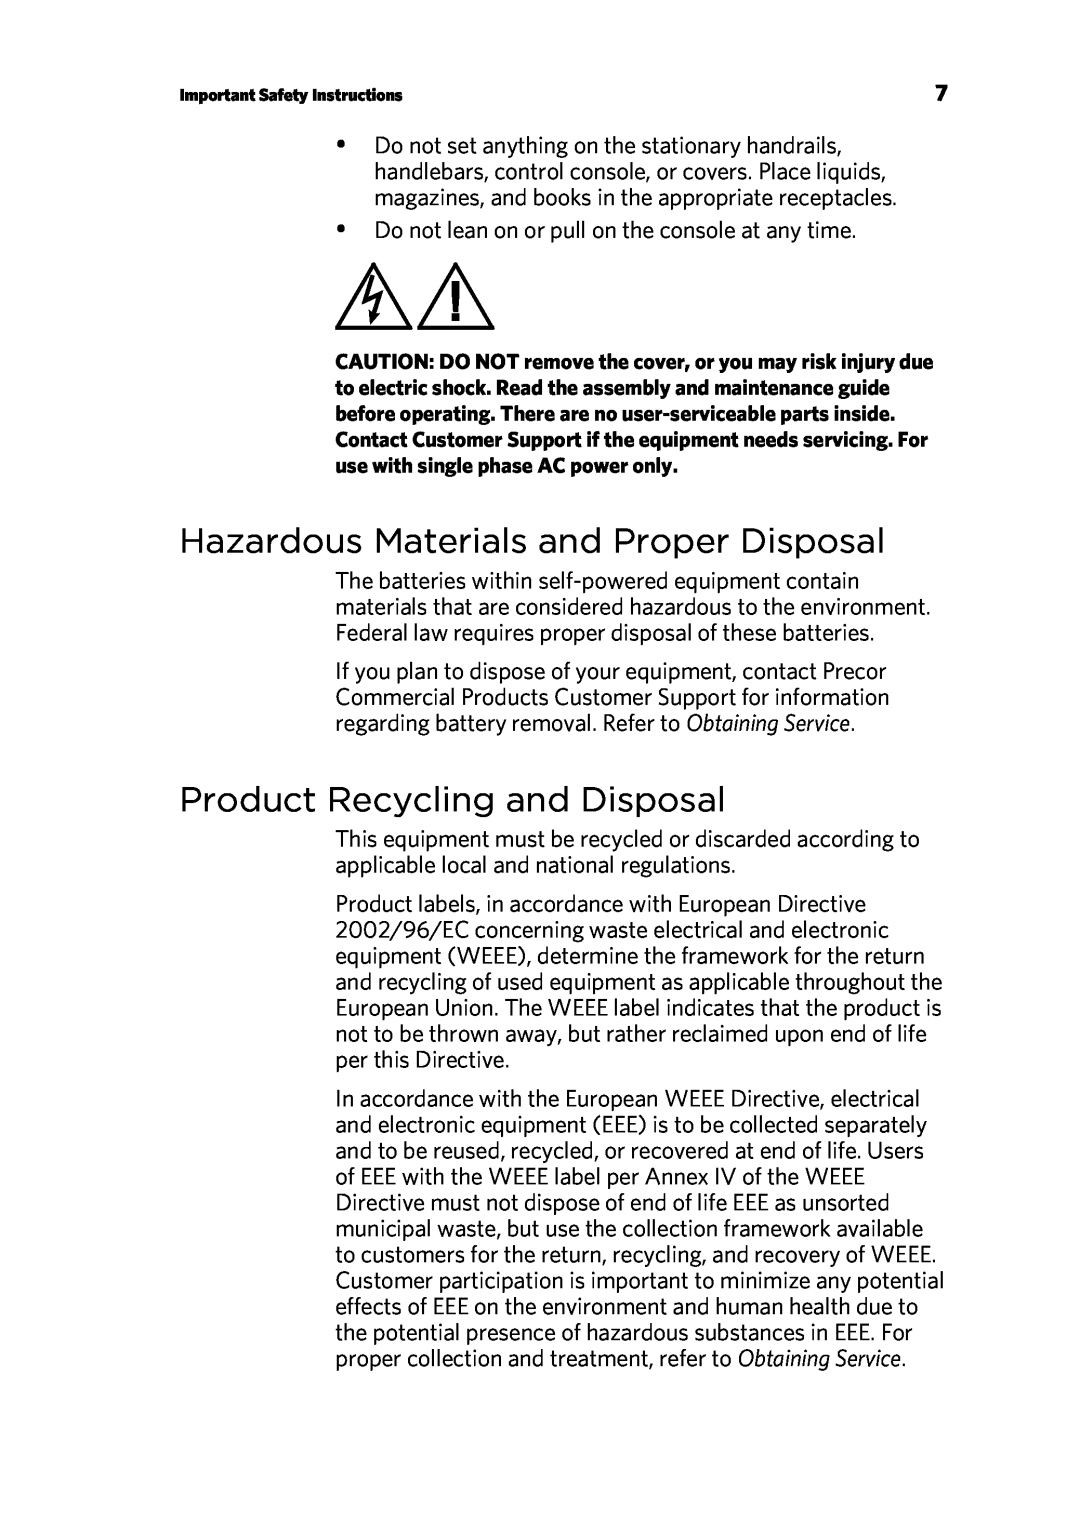 Precor P30 manual Hazardous Materials and Proper Disposal, Product Recycling and Disposal 